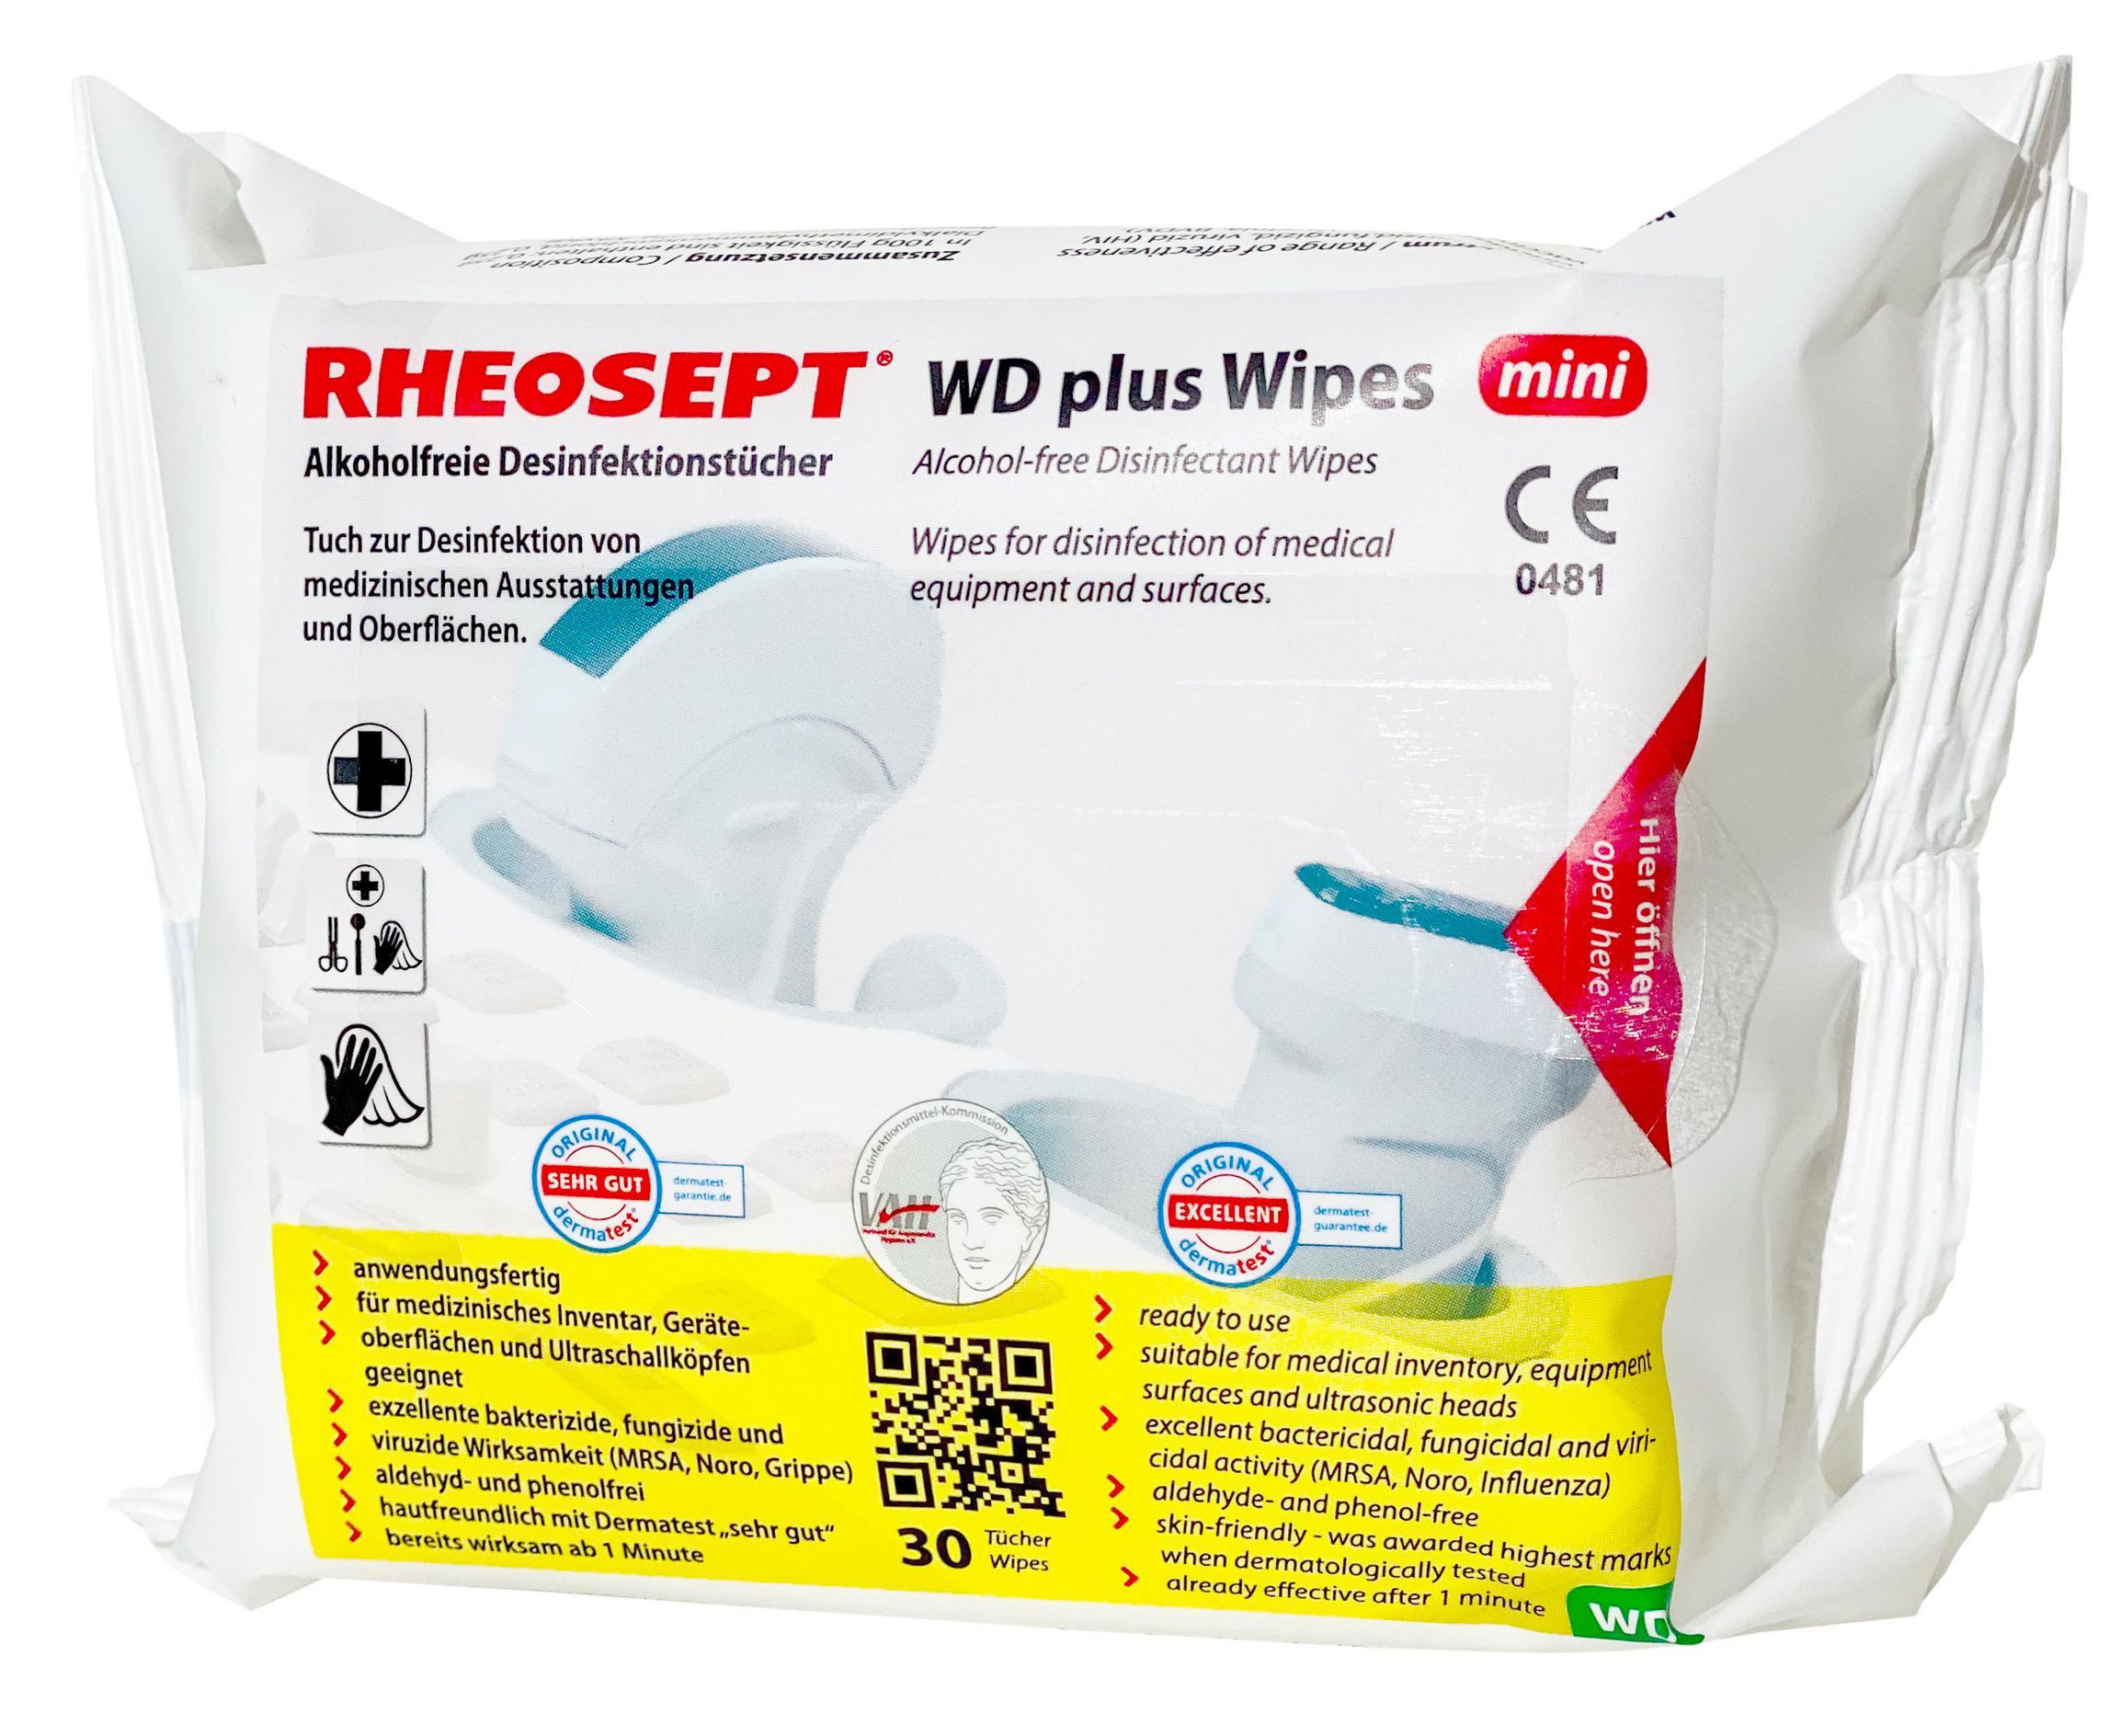 Rheosept-WD plus Wipes